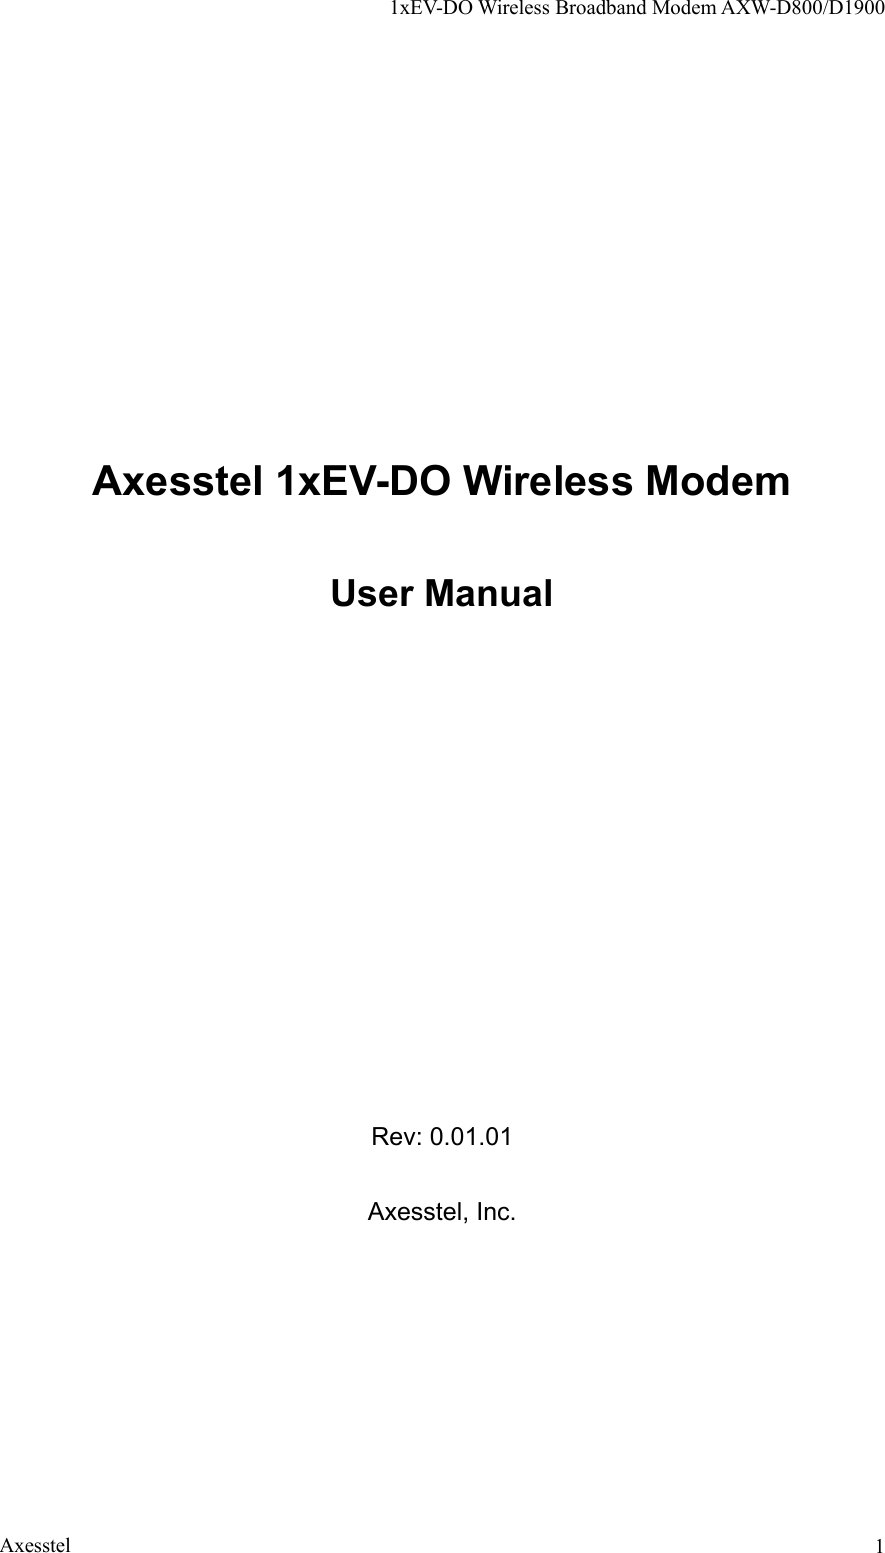 1xEV-DO Wireless Broadband Modem AXW-D800/D1900 Axesstel  1     Axesstel 1xEV-DO Wireless Modem  User Manual              Rev: 0.01.01  Axesstel, Inc.   